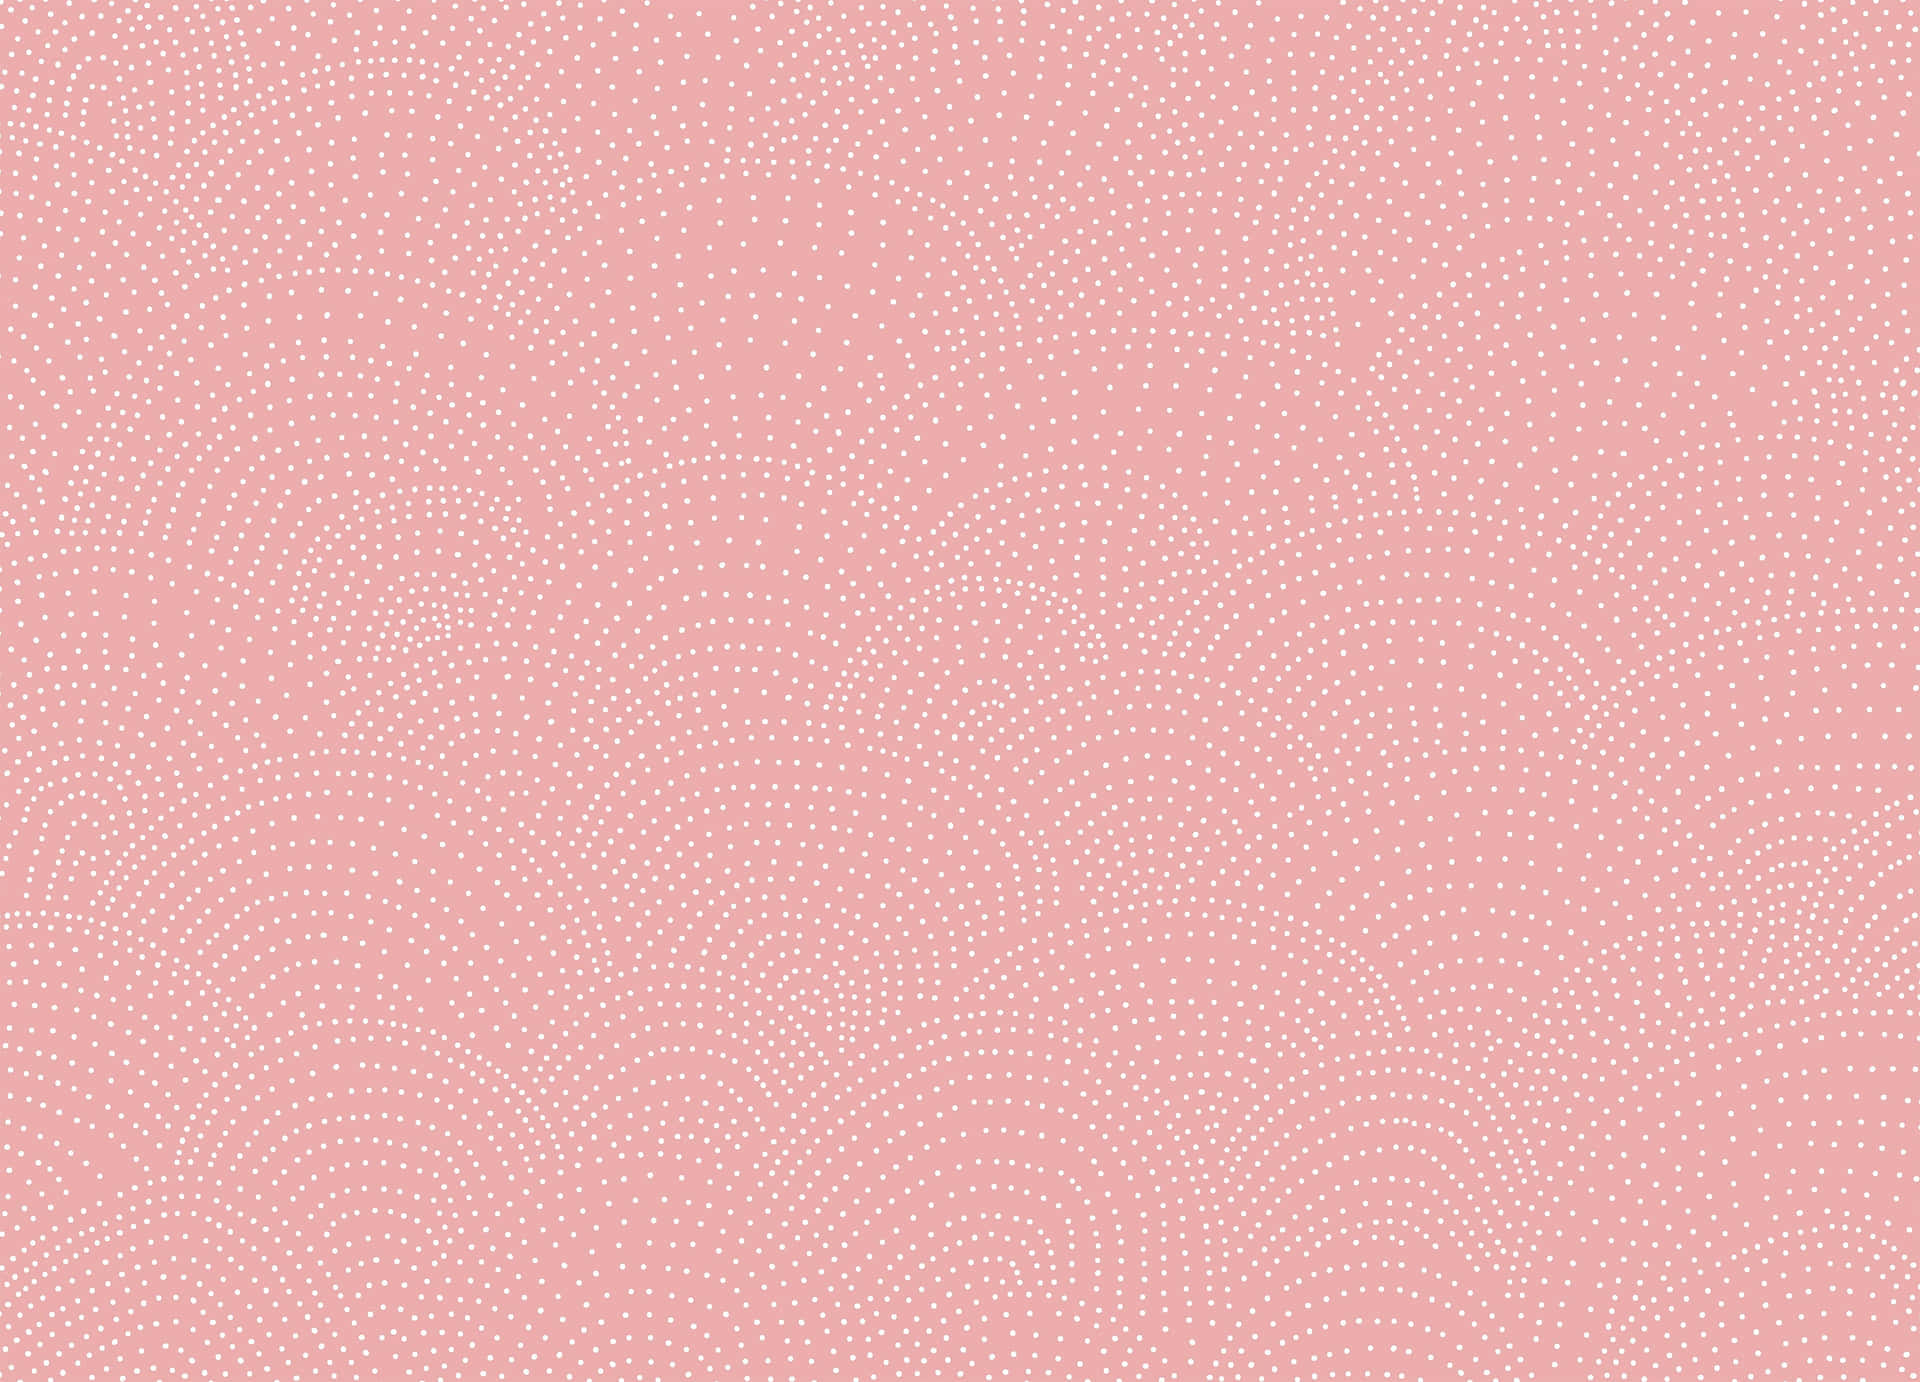 Bright pink and white polka dot pattern. Wallpaper